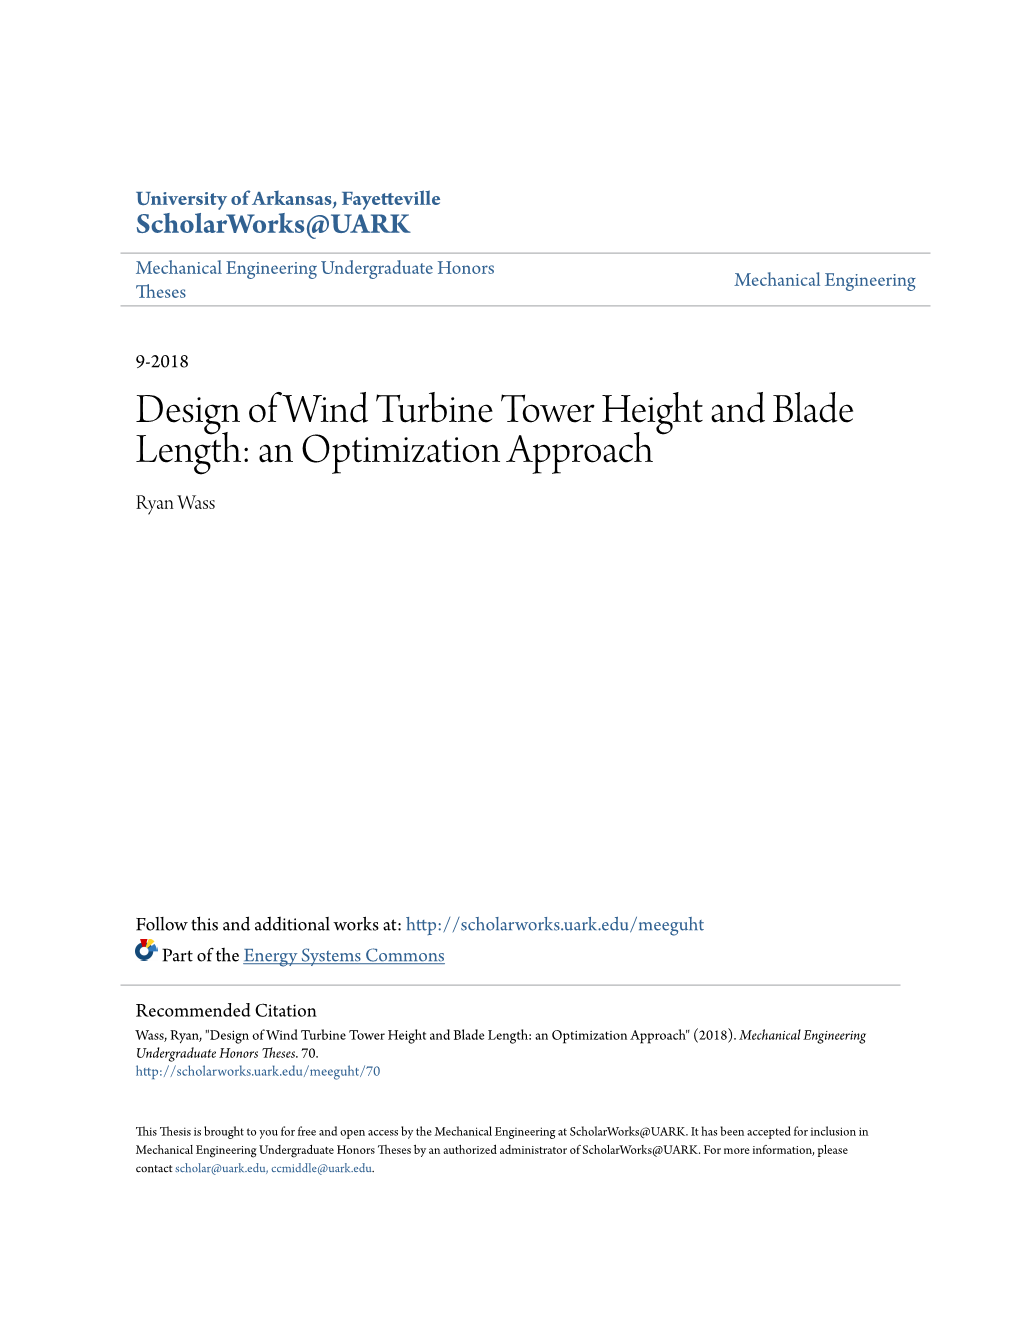 Design of Wind Turbine Tower Height and Blade Length: an Optimization Approach Ryan Wass